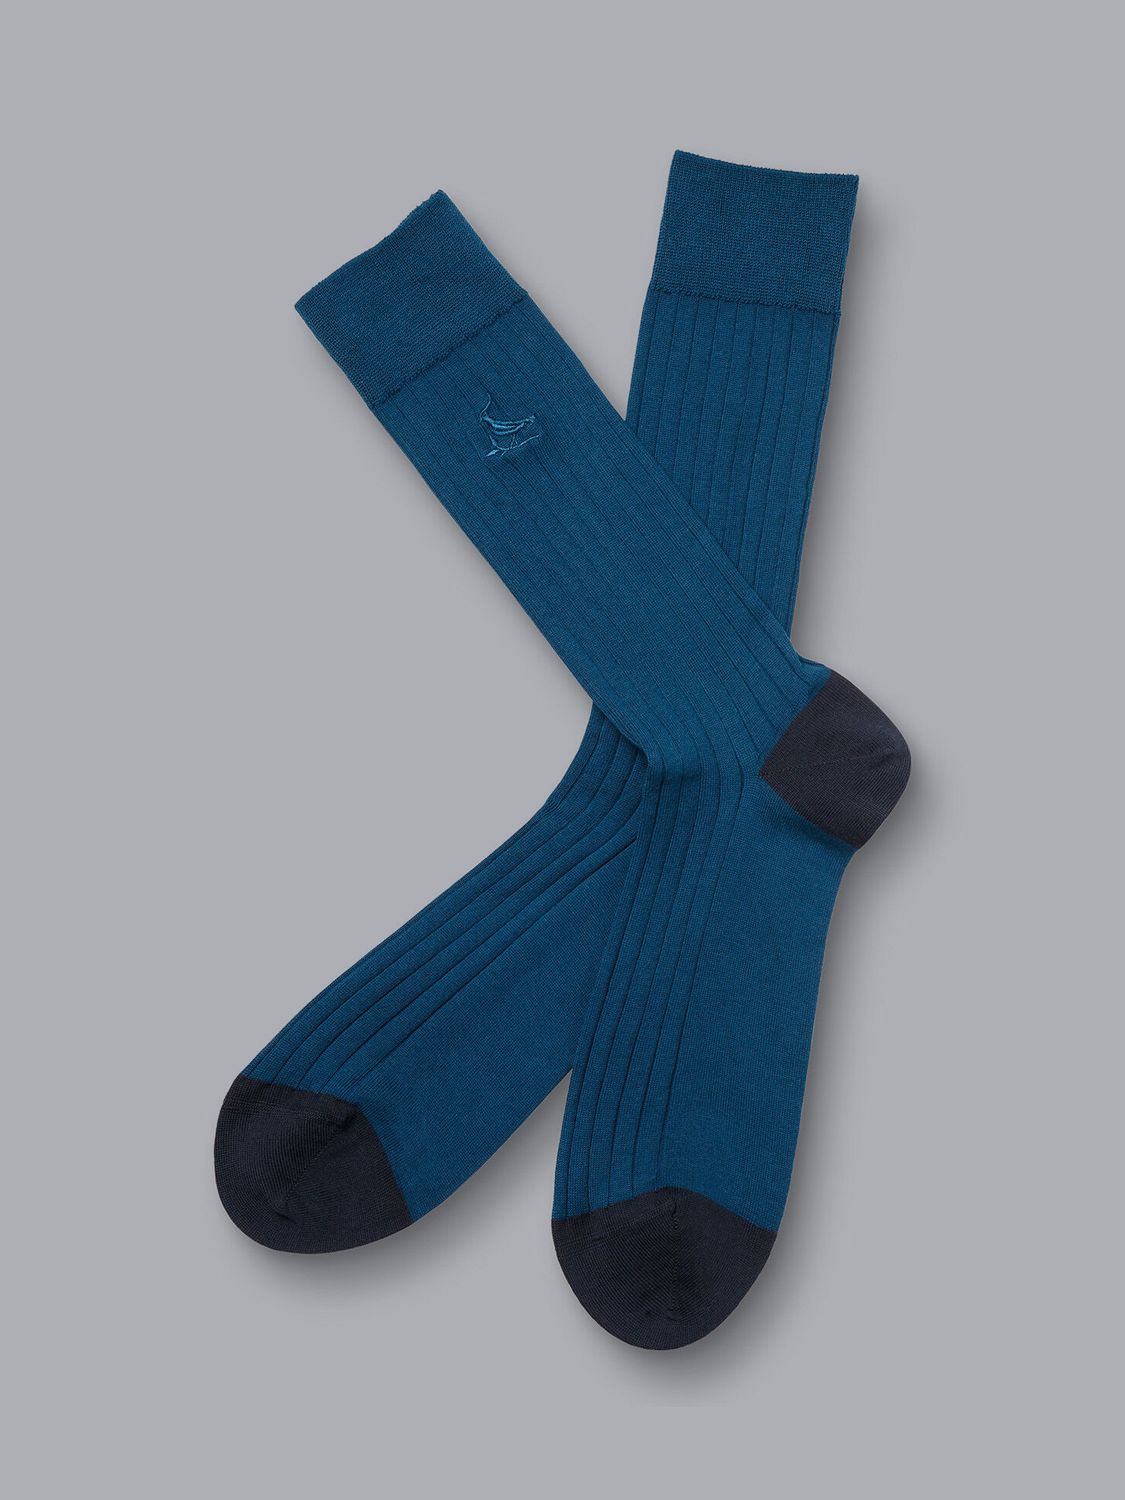 Buy Charles Tyrwhitt Dark Green Cotton Rib Socks Online at johnlewis.com